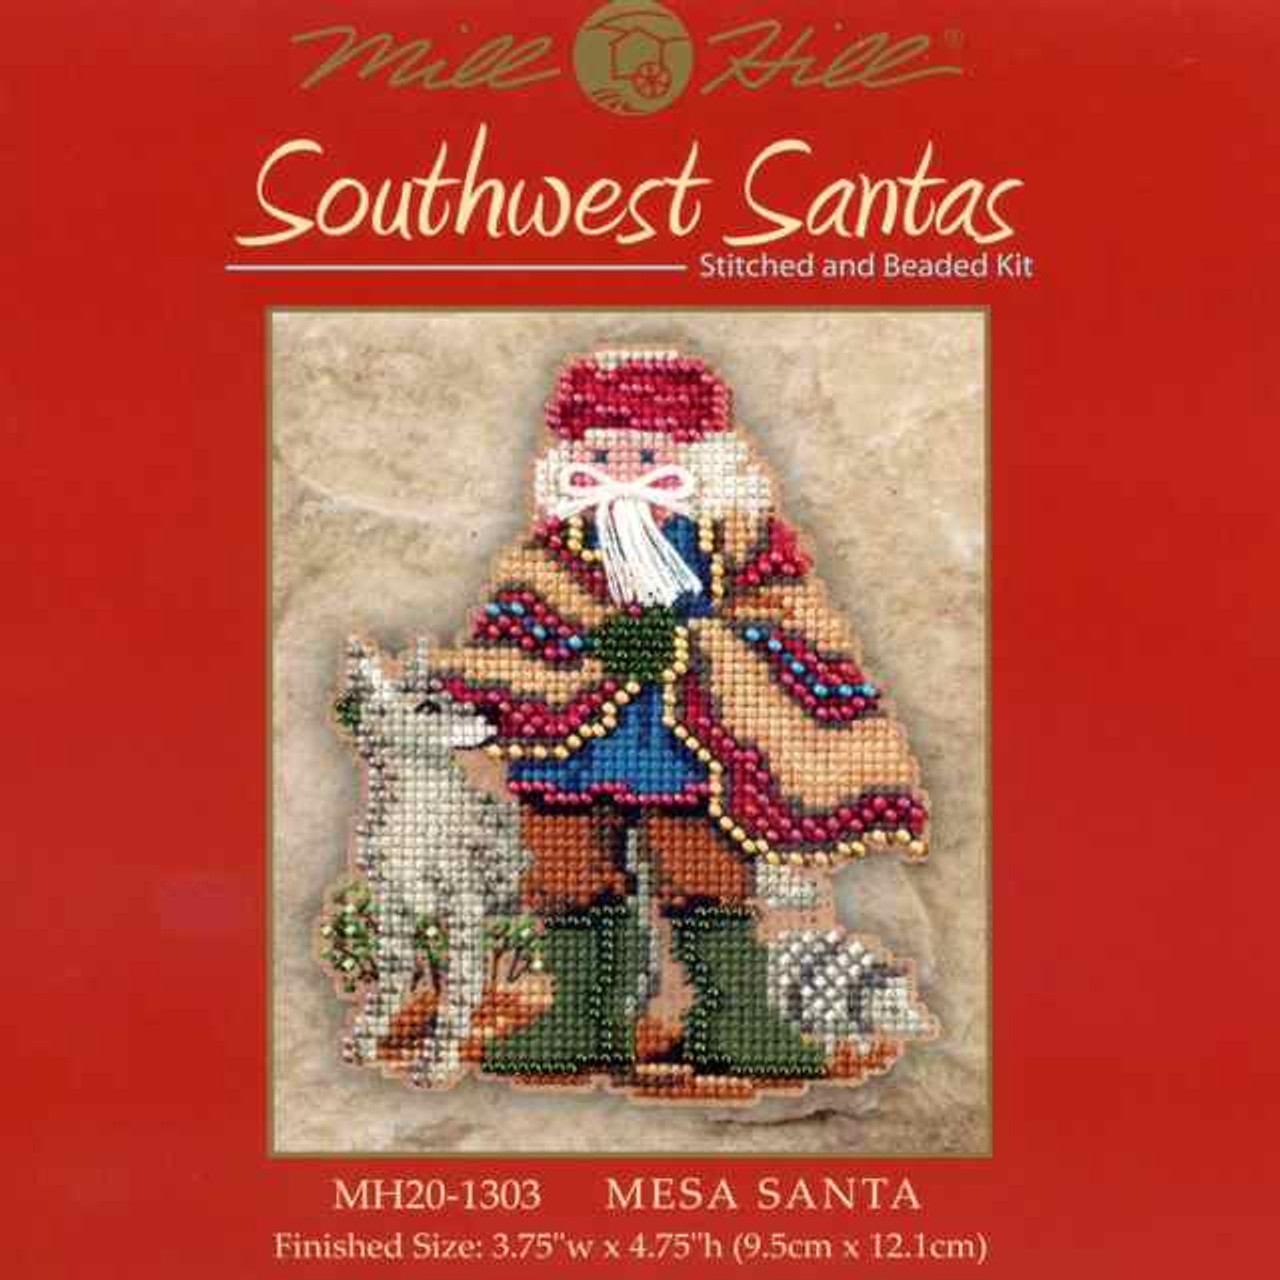 Mesa Santa Beaded Holiday Ornament Kit Mill Hill 2011 Southwest Santas